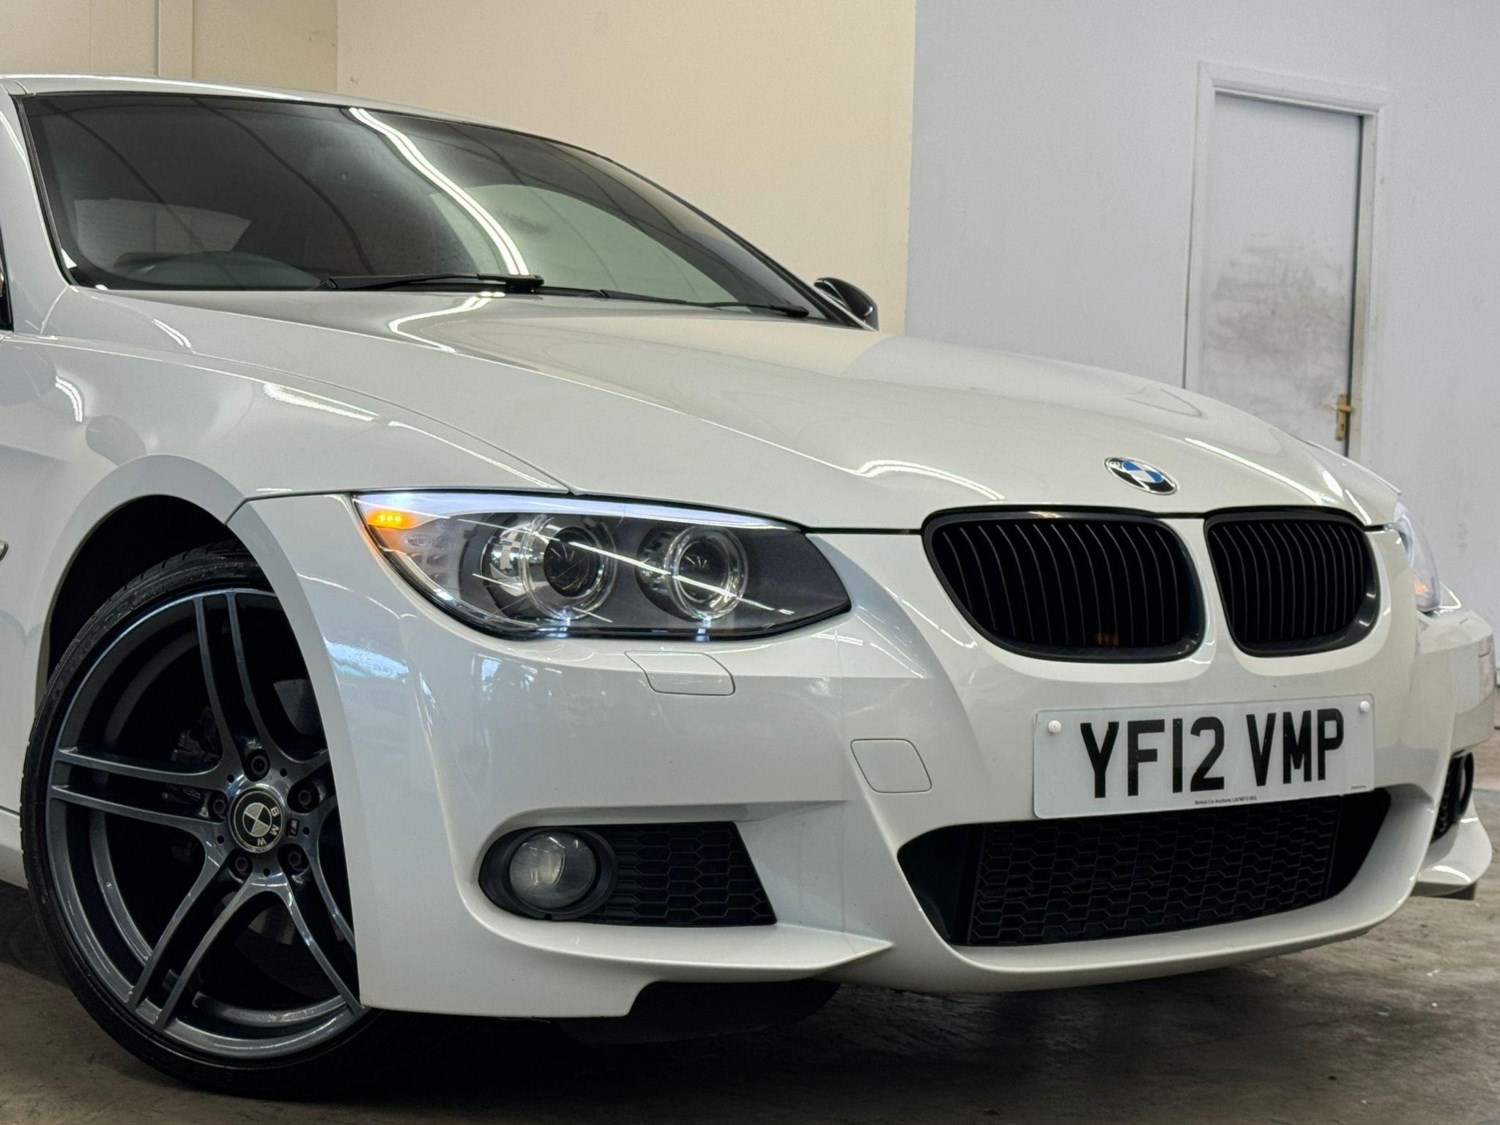 BMW 3 Series Listing Image